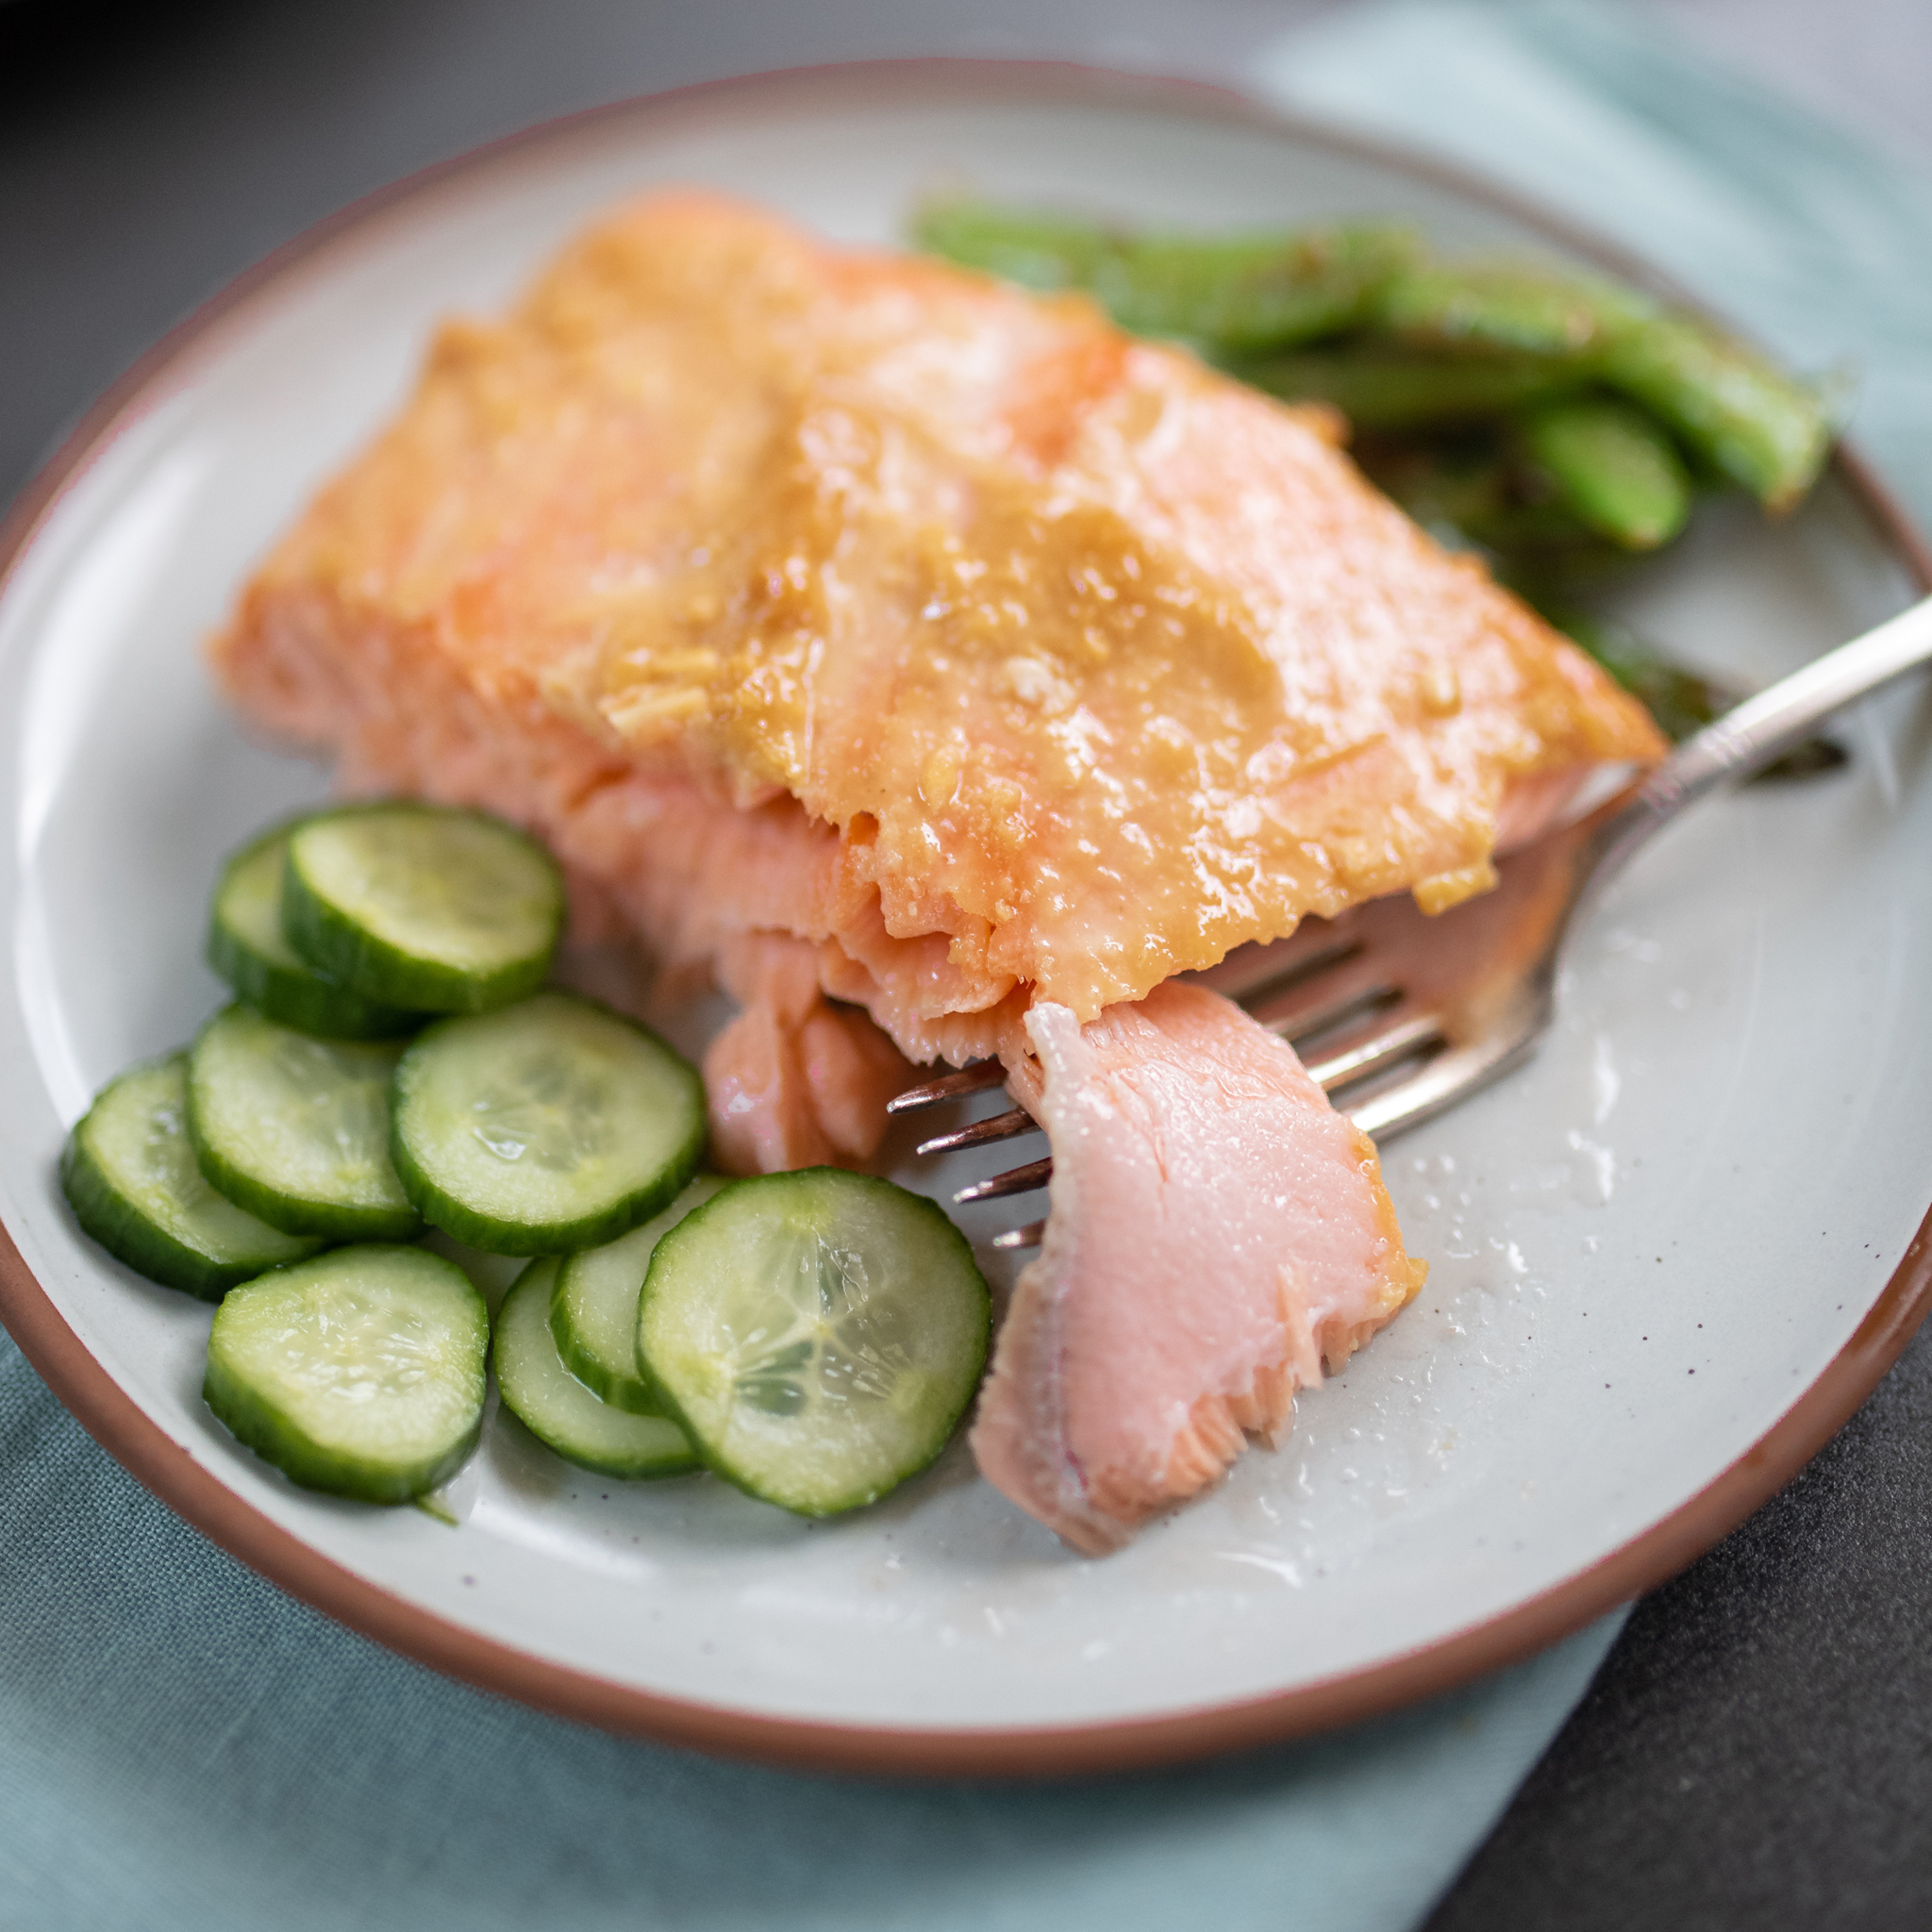 Samantha Seneviratne's Miso-Glazed Salmon with Blistered Snap Peas